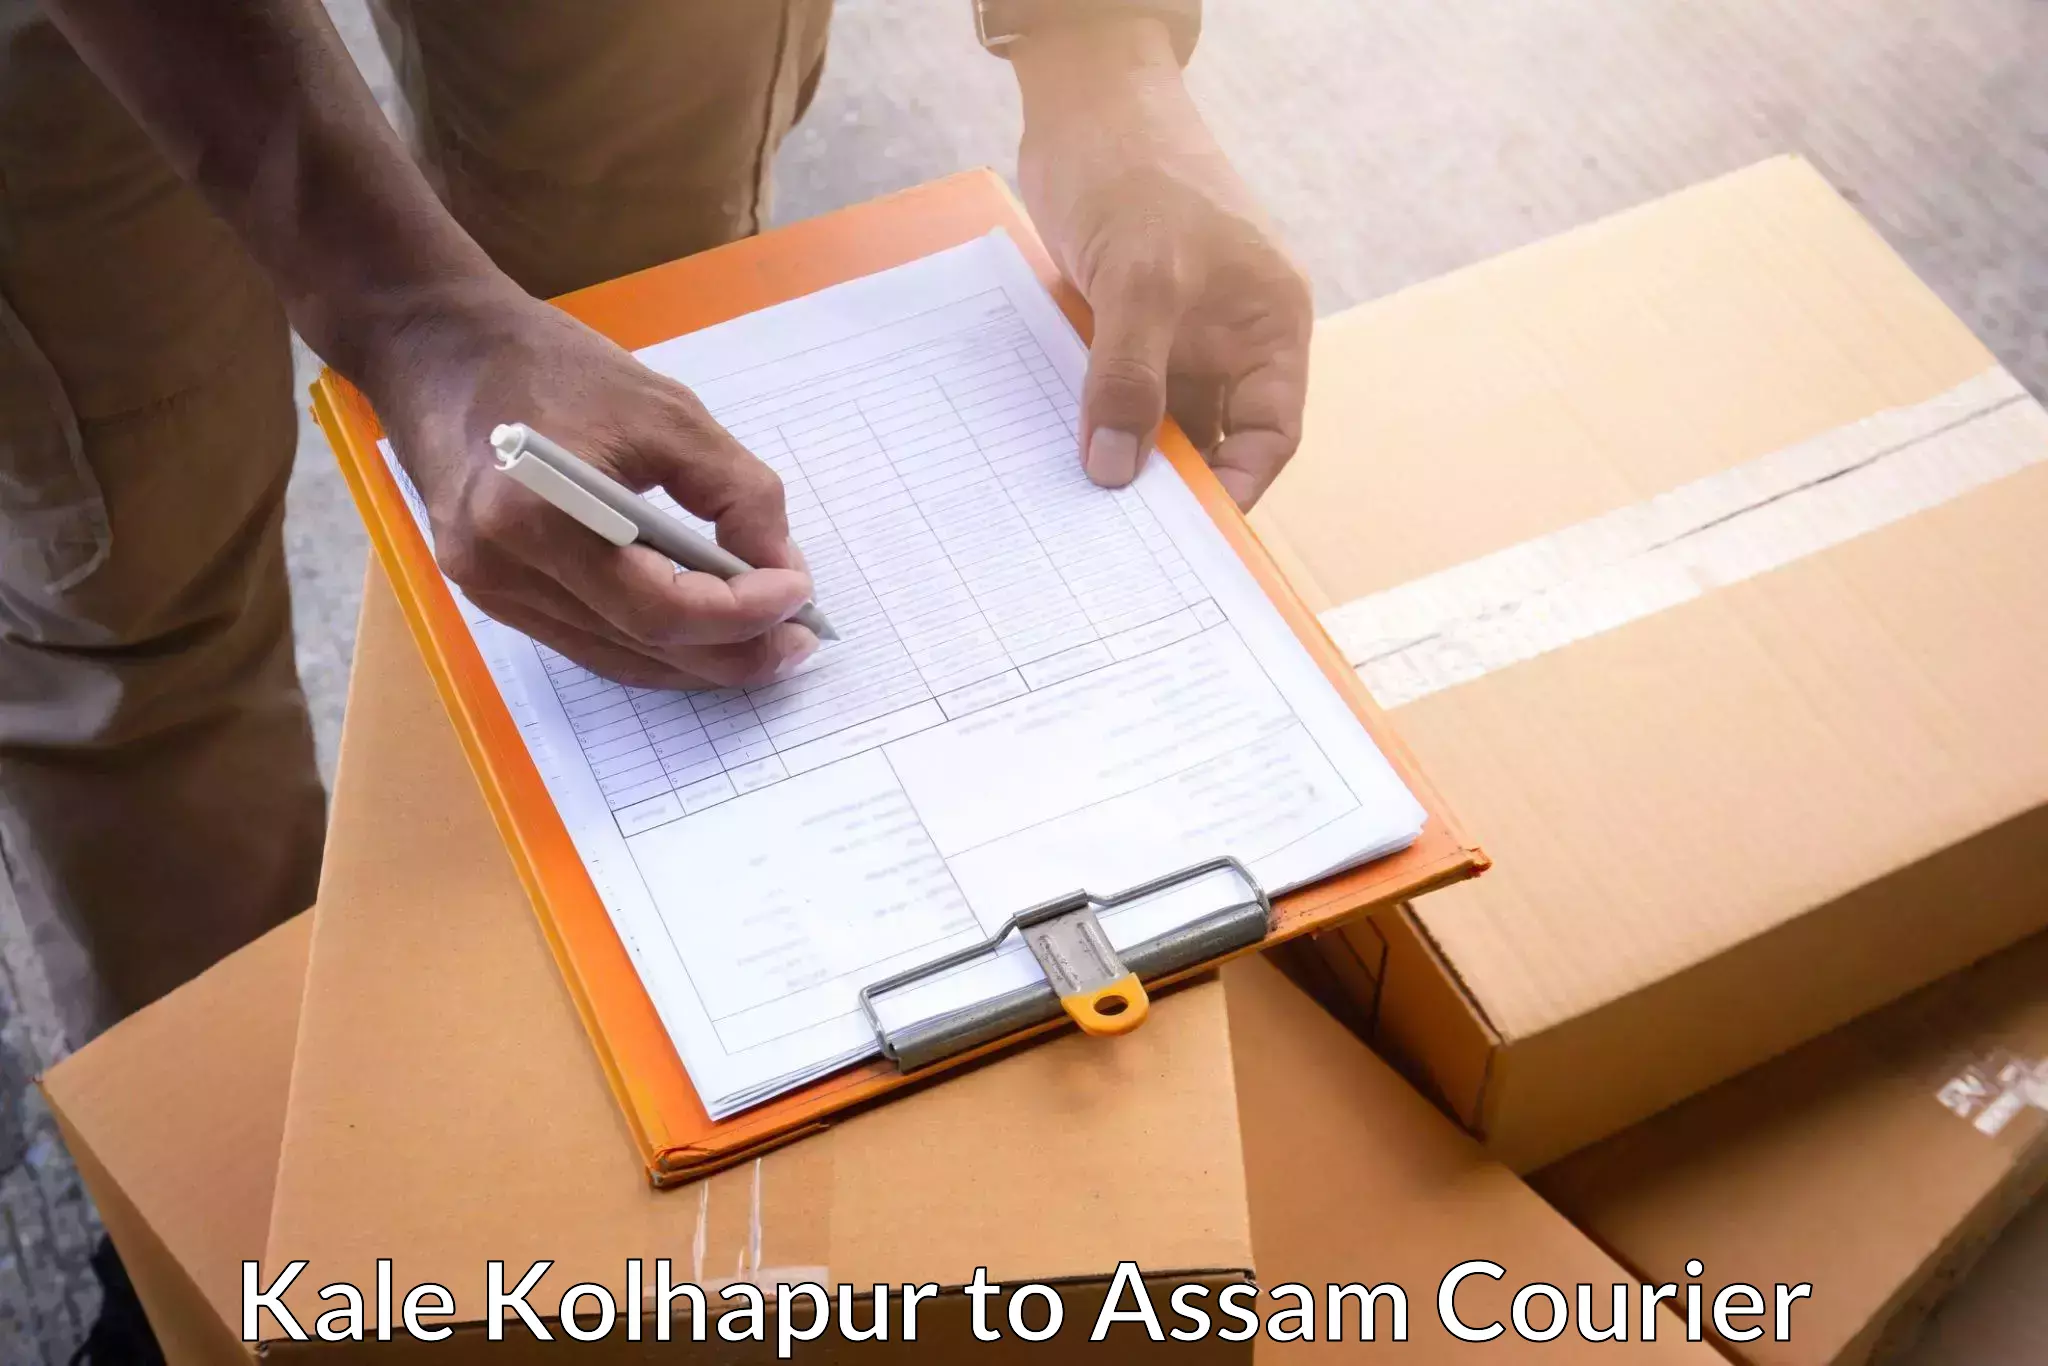 Courier service comparison Kale Kolhapur to IIT Guwahati